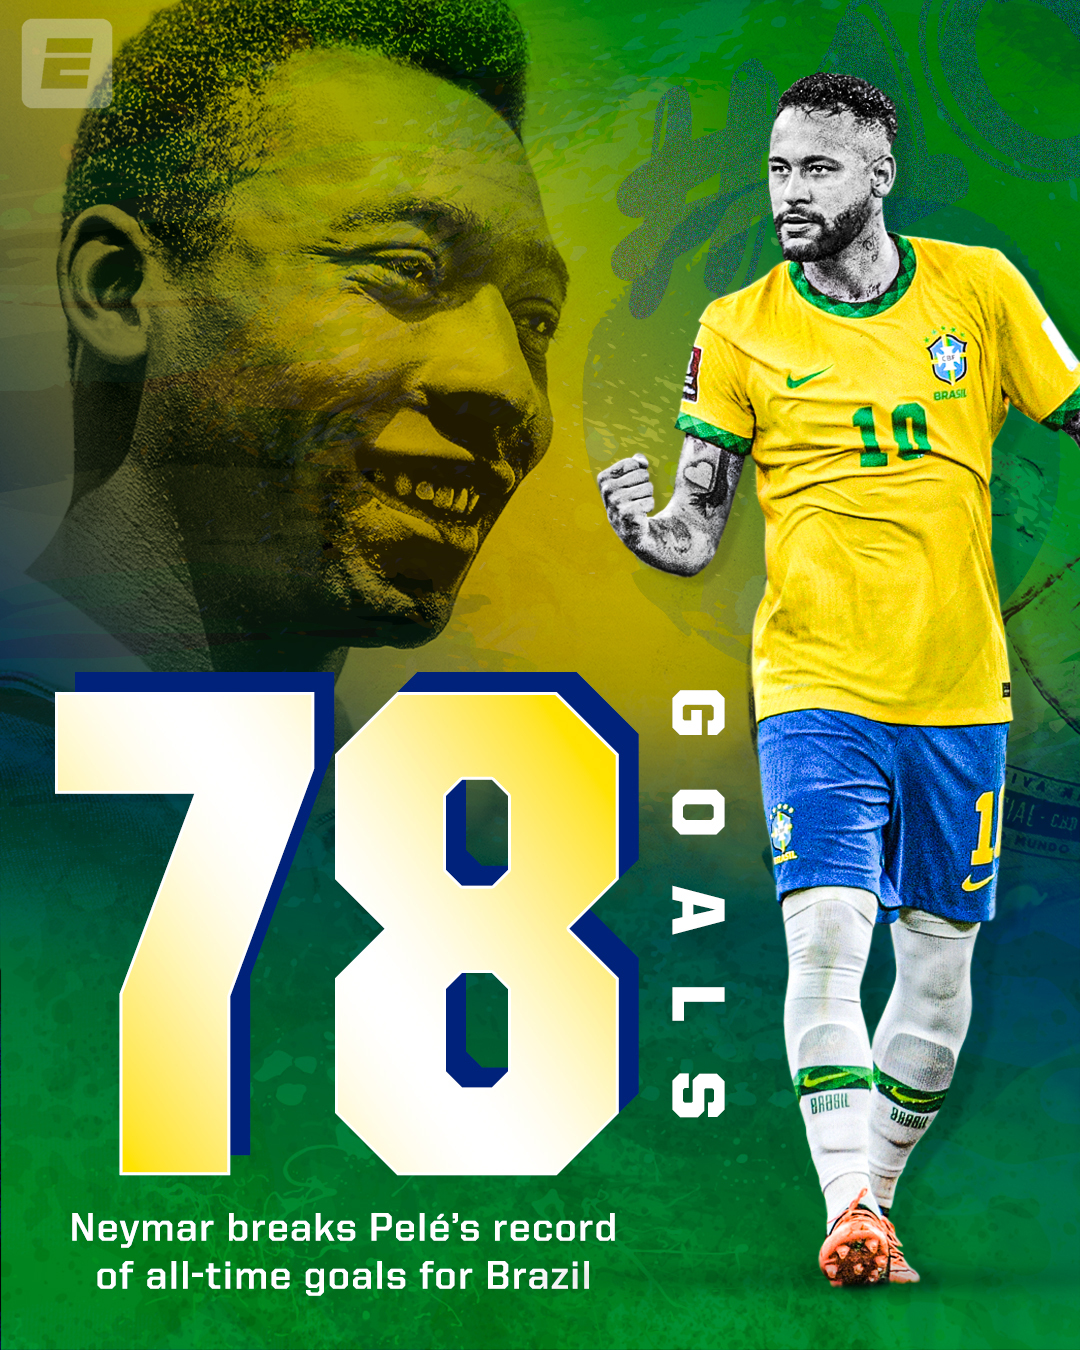 Who is Brazil's leading all-time top goal scorer? Pele, Neymar